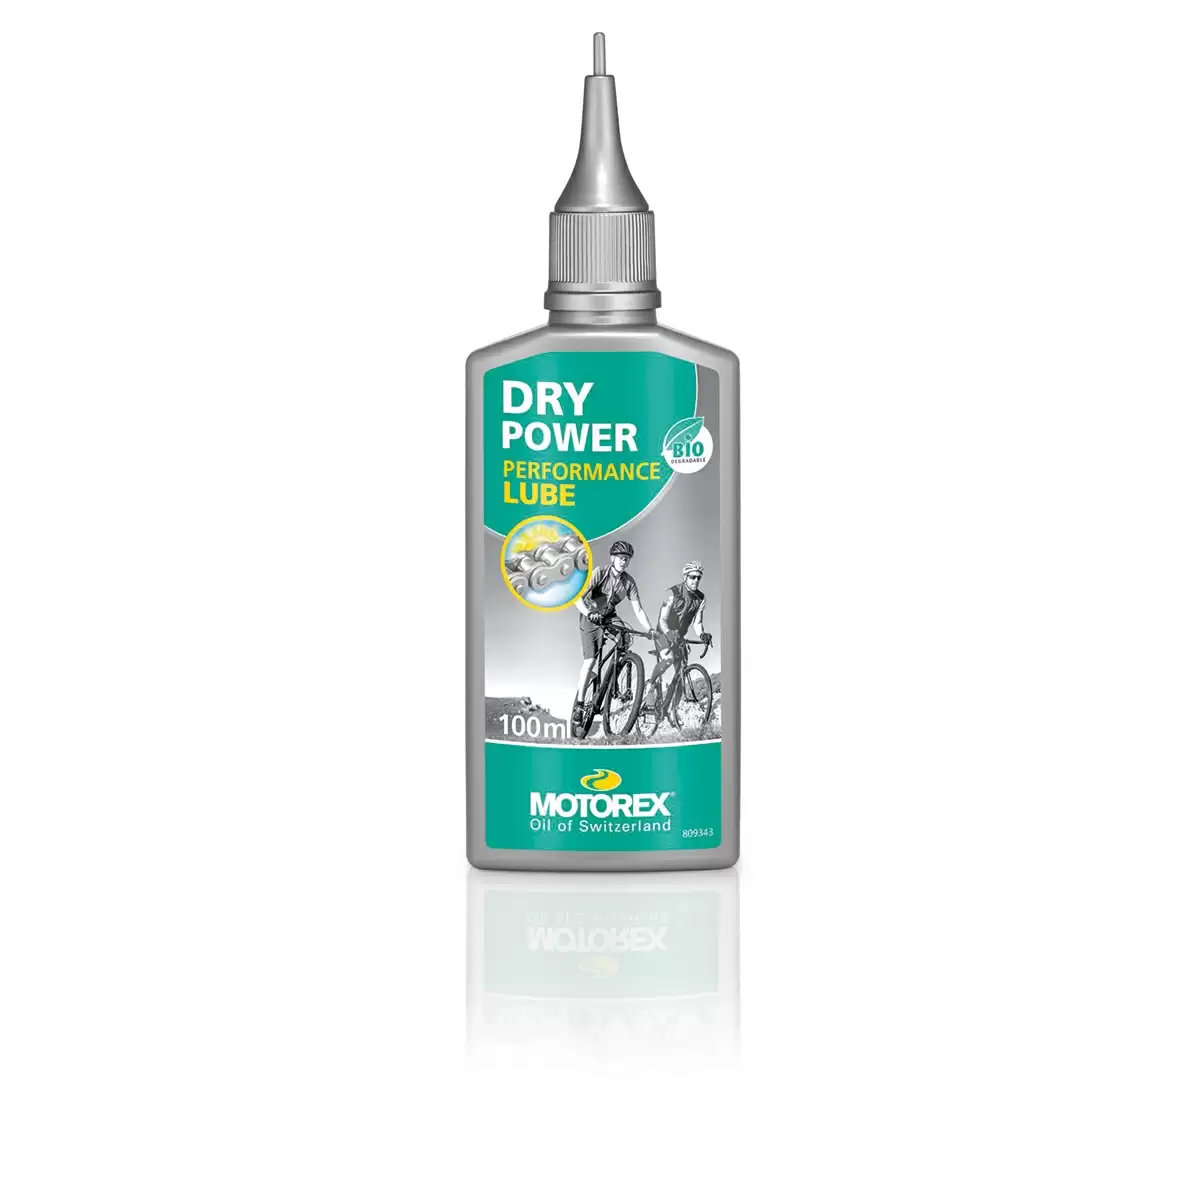 Botella de lubricante Dry Power 100ml - image